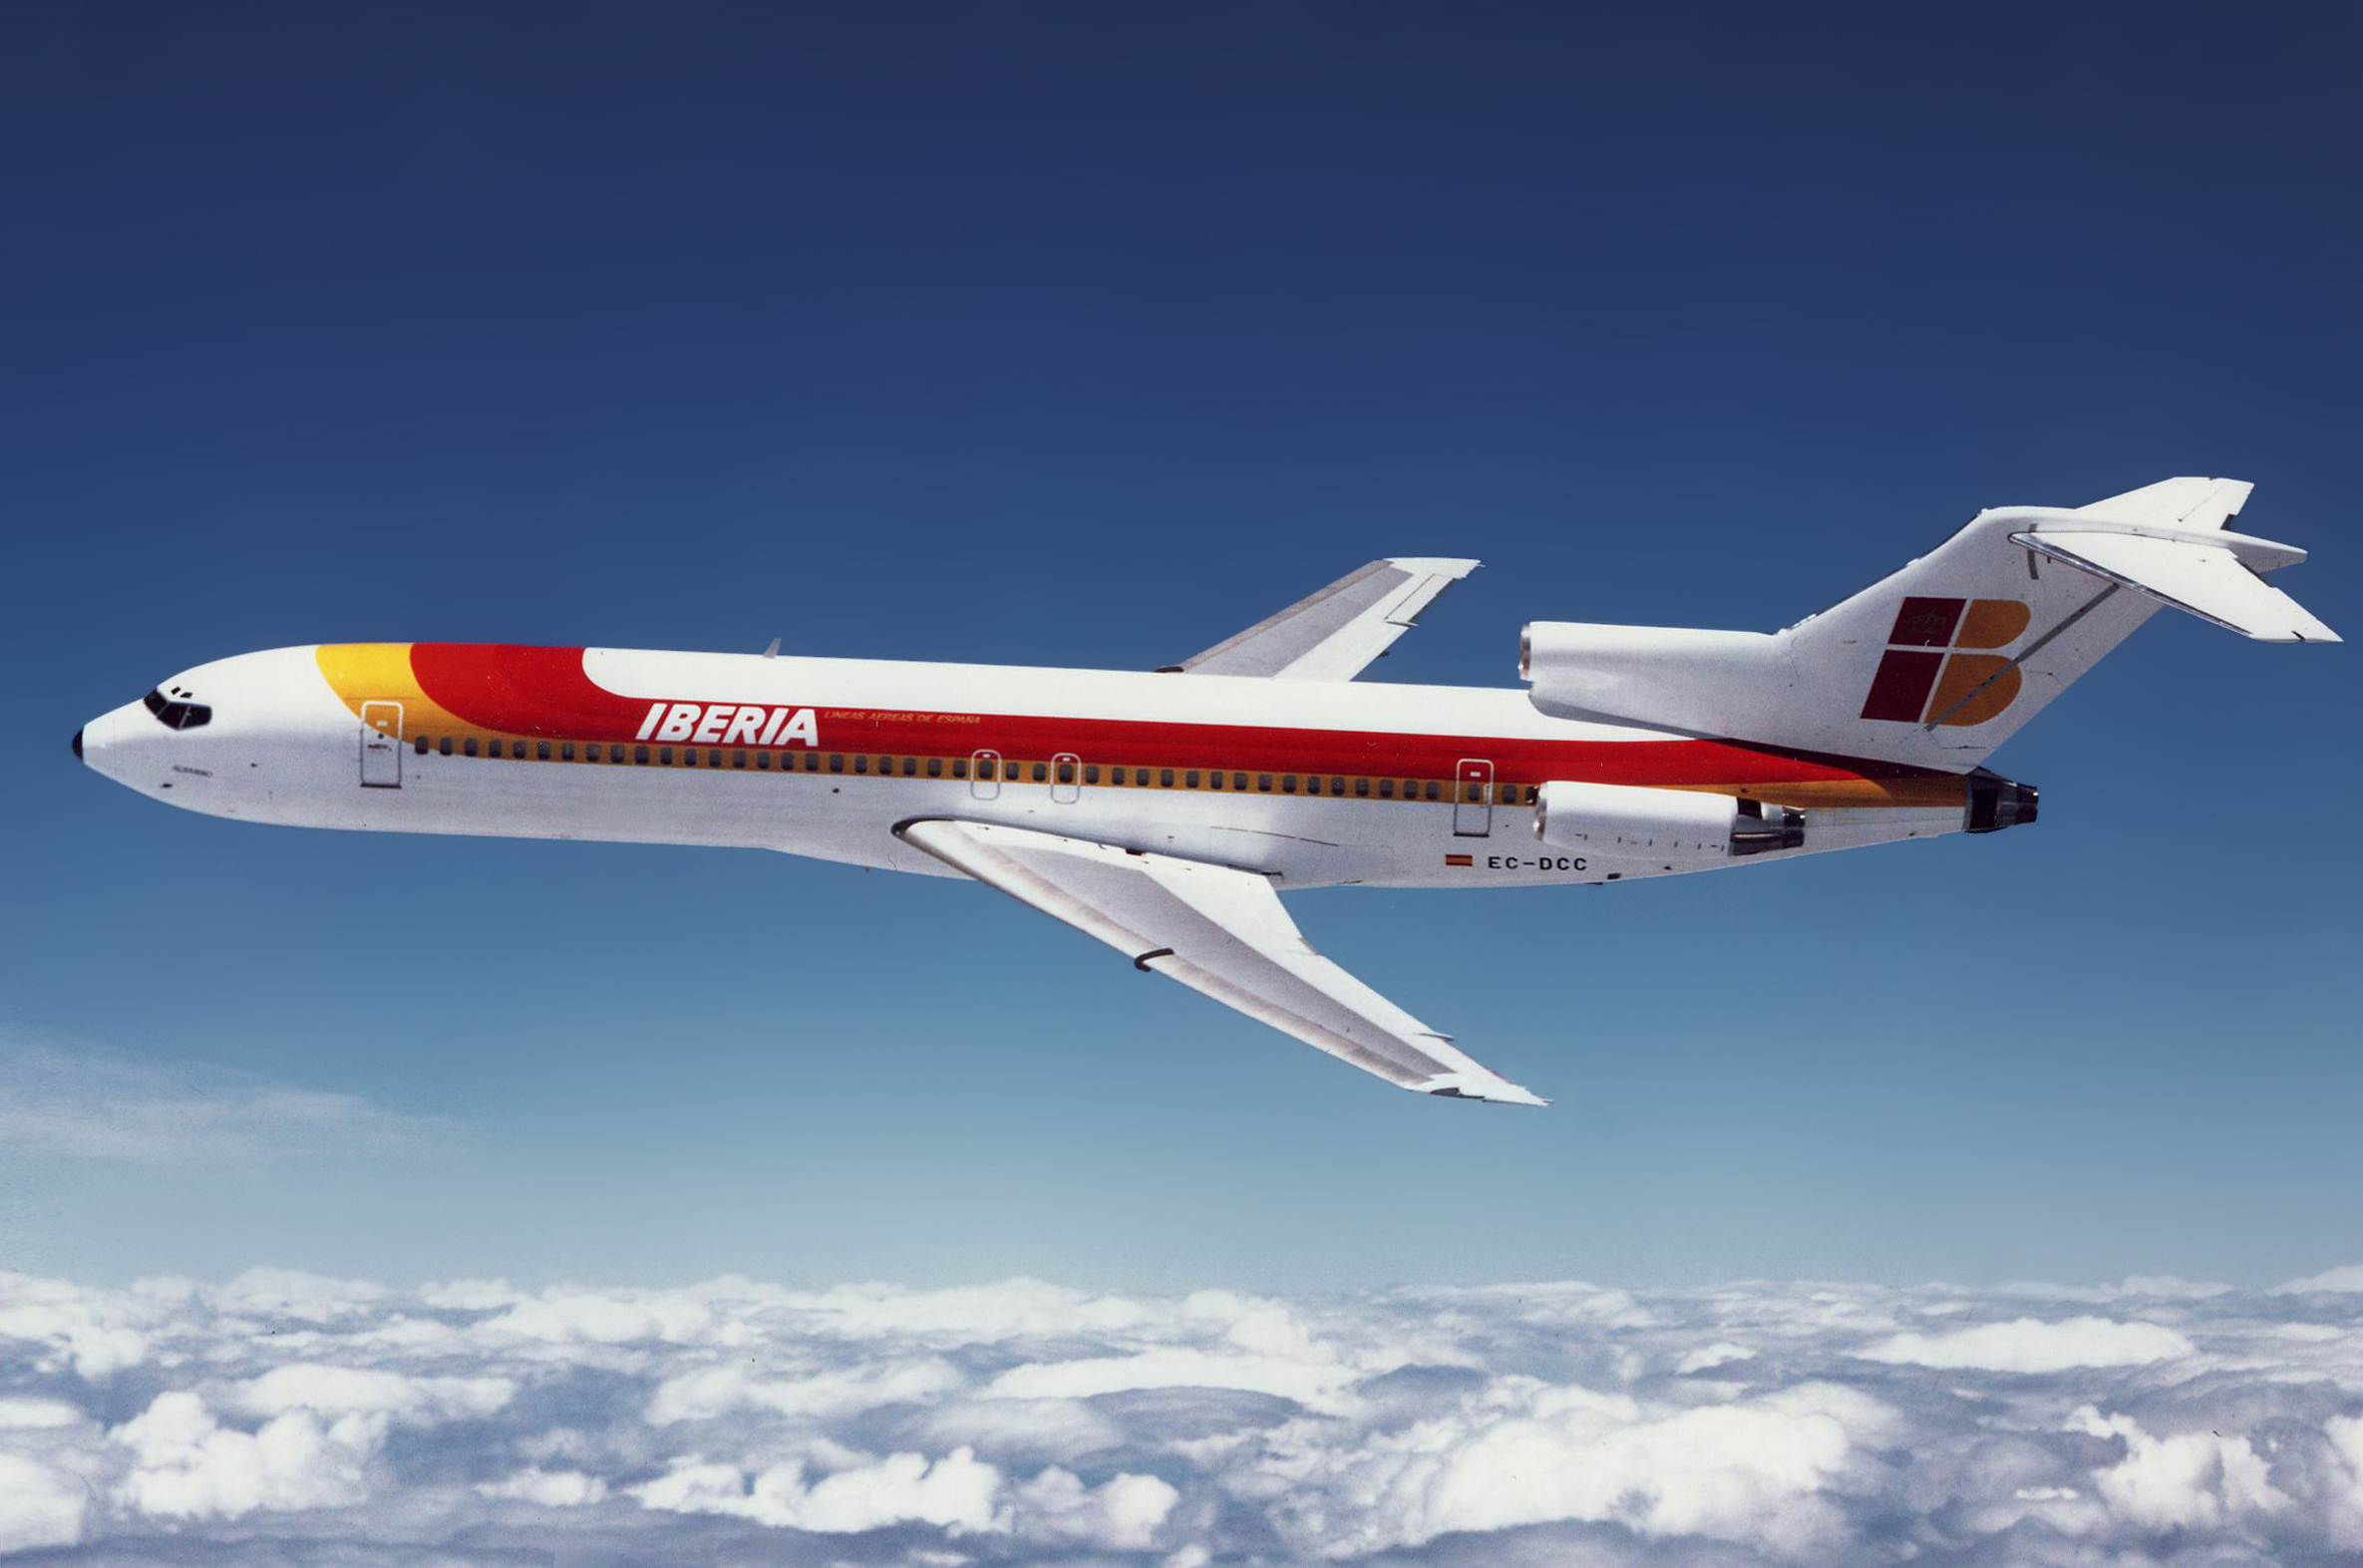 Boeing 727 Wallpapers